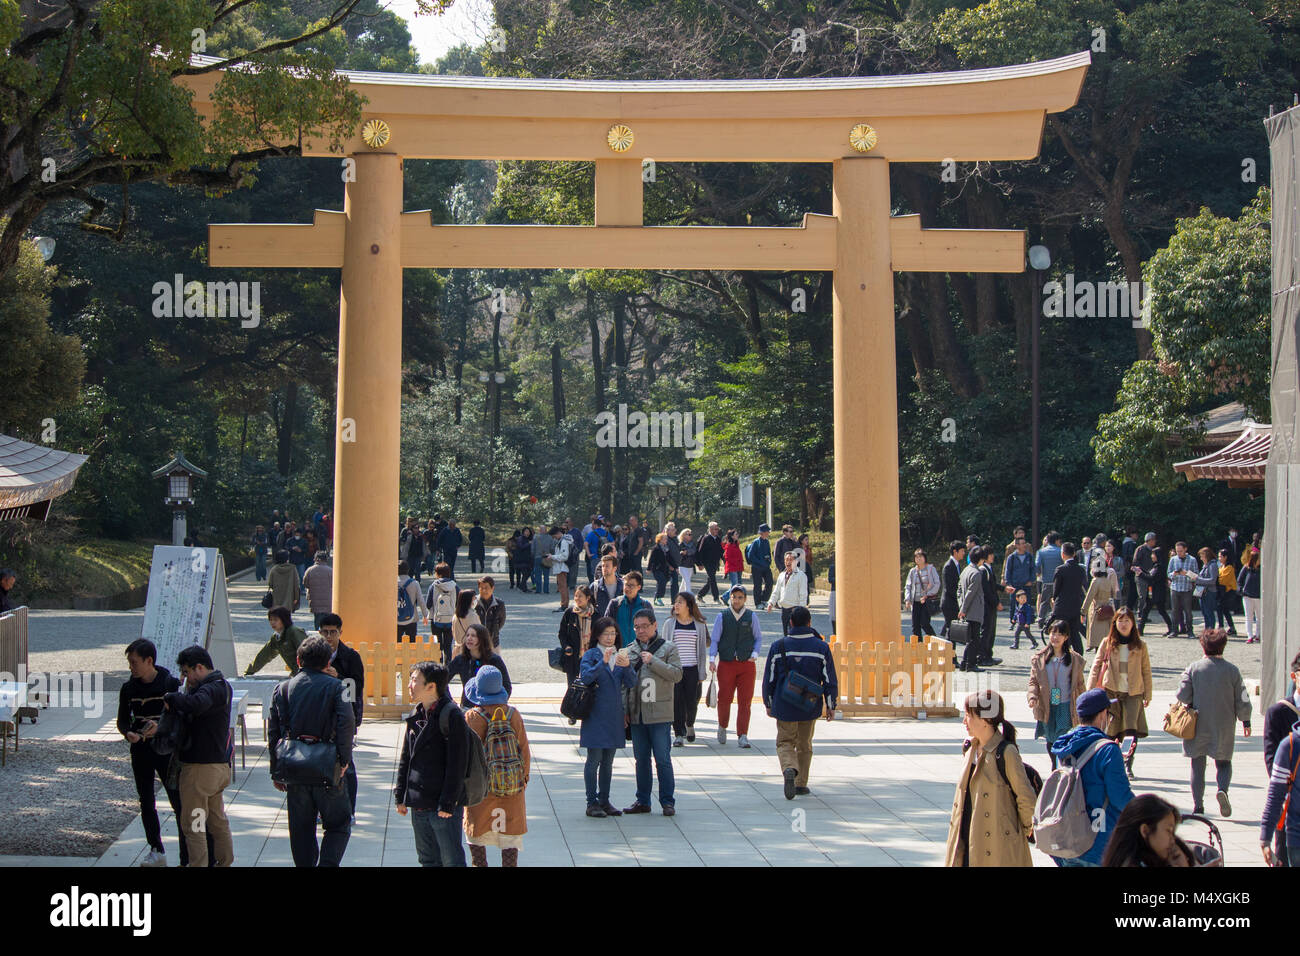 The Torii (shrine archway) at Meiji Jingu shrine in Tokyo Stock Photo